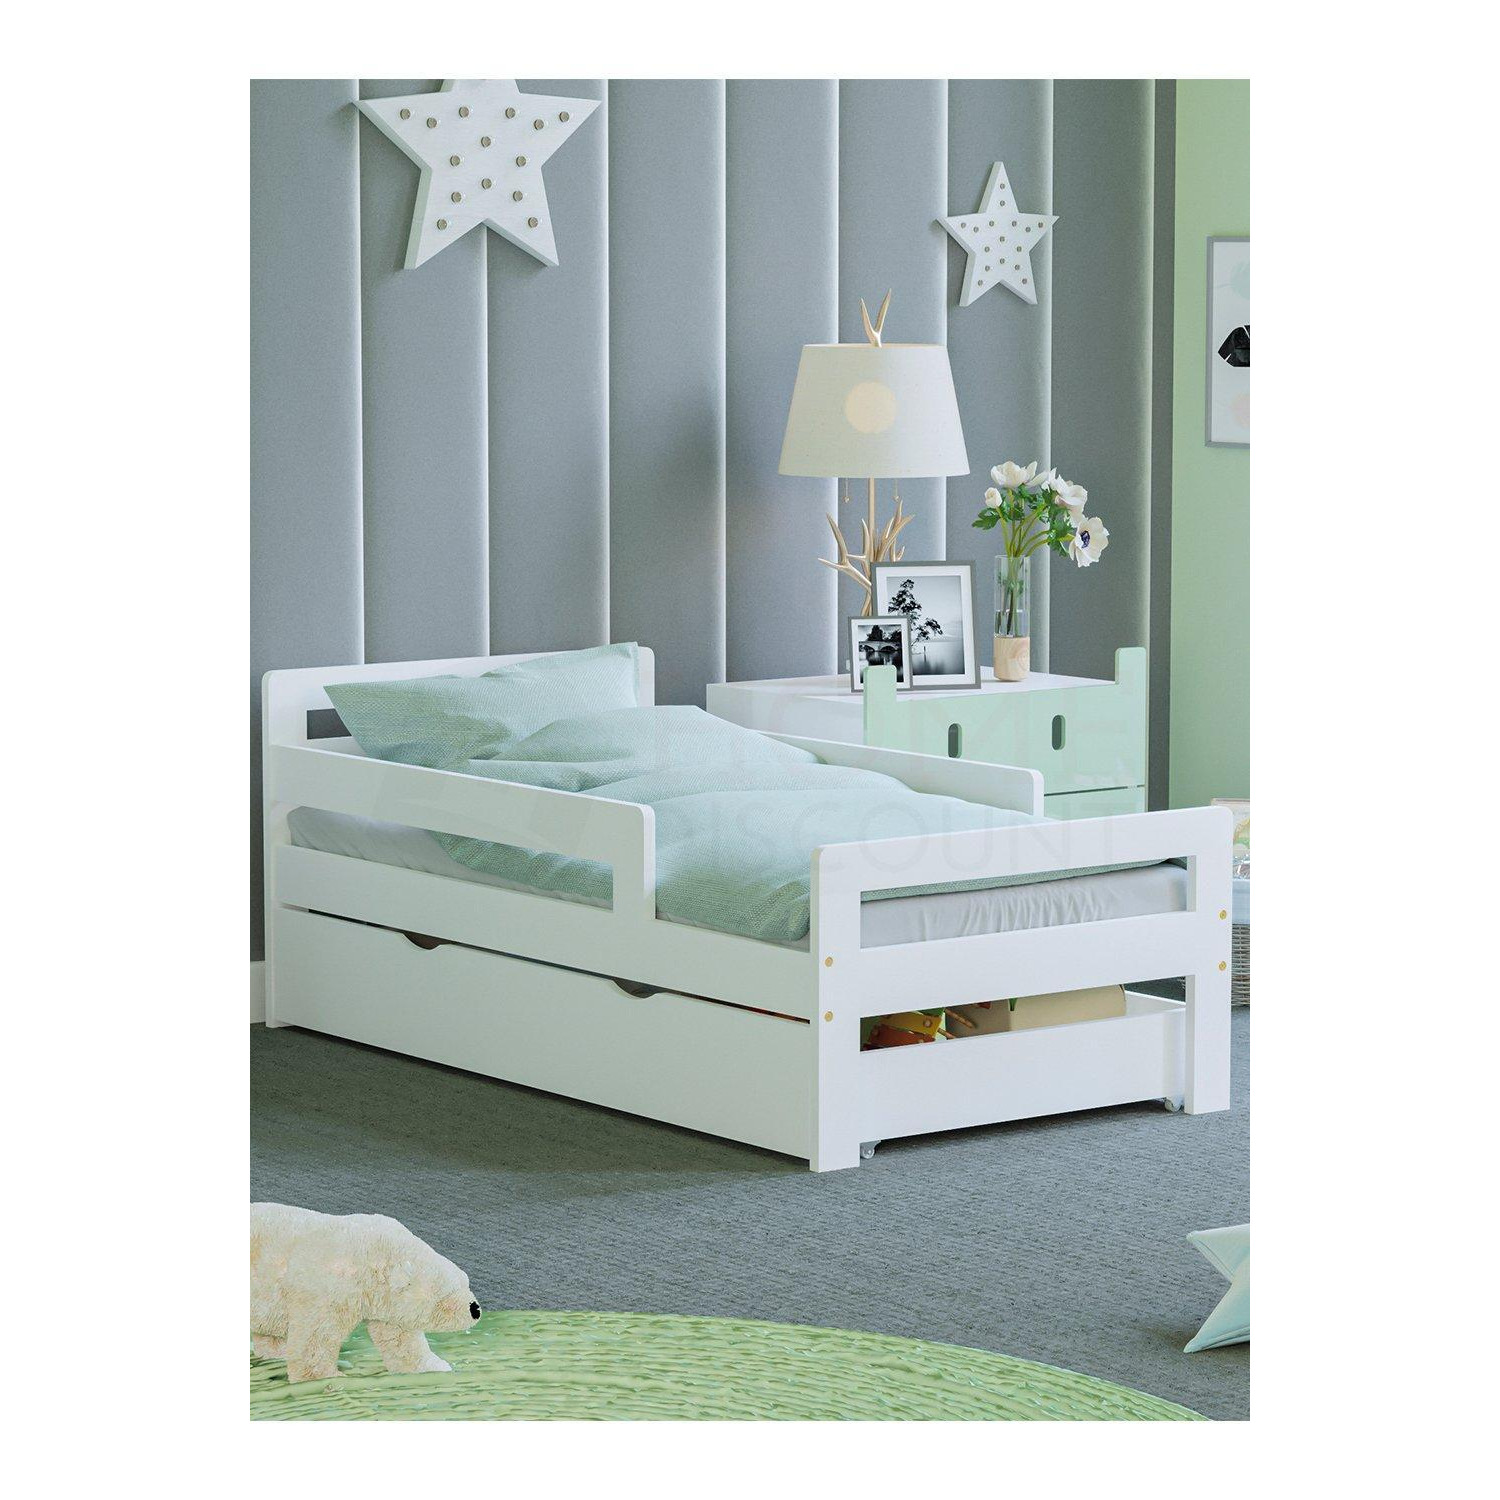 Junior Vida Taurus Toddler Bed With Storage Children Kids Bedroom Furniture - image 1